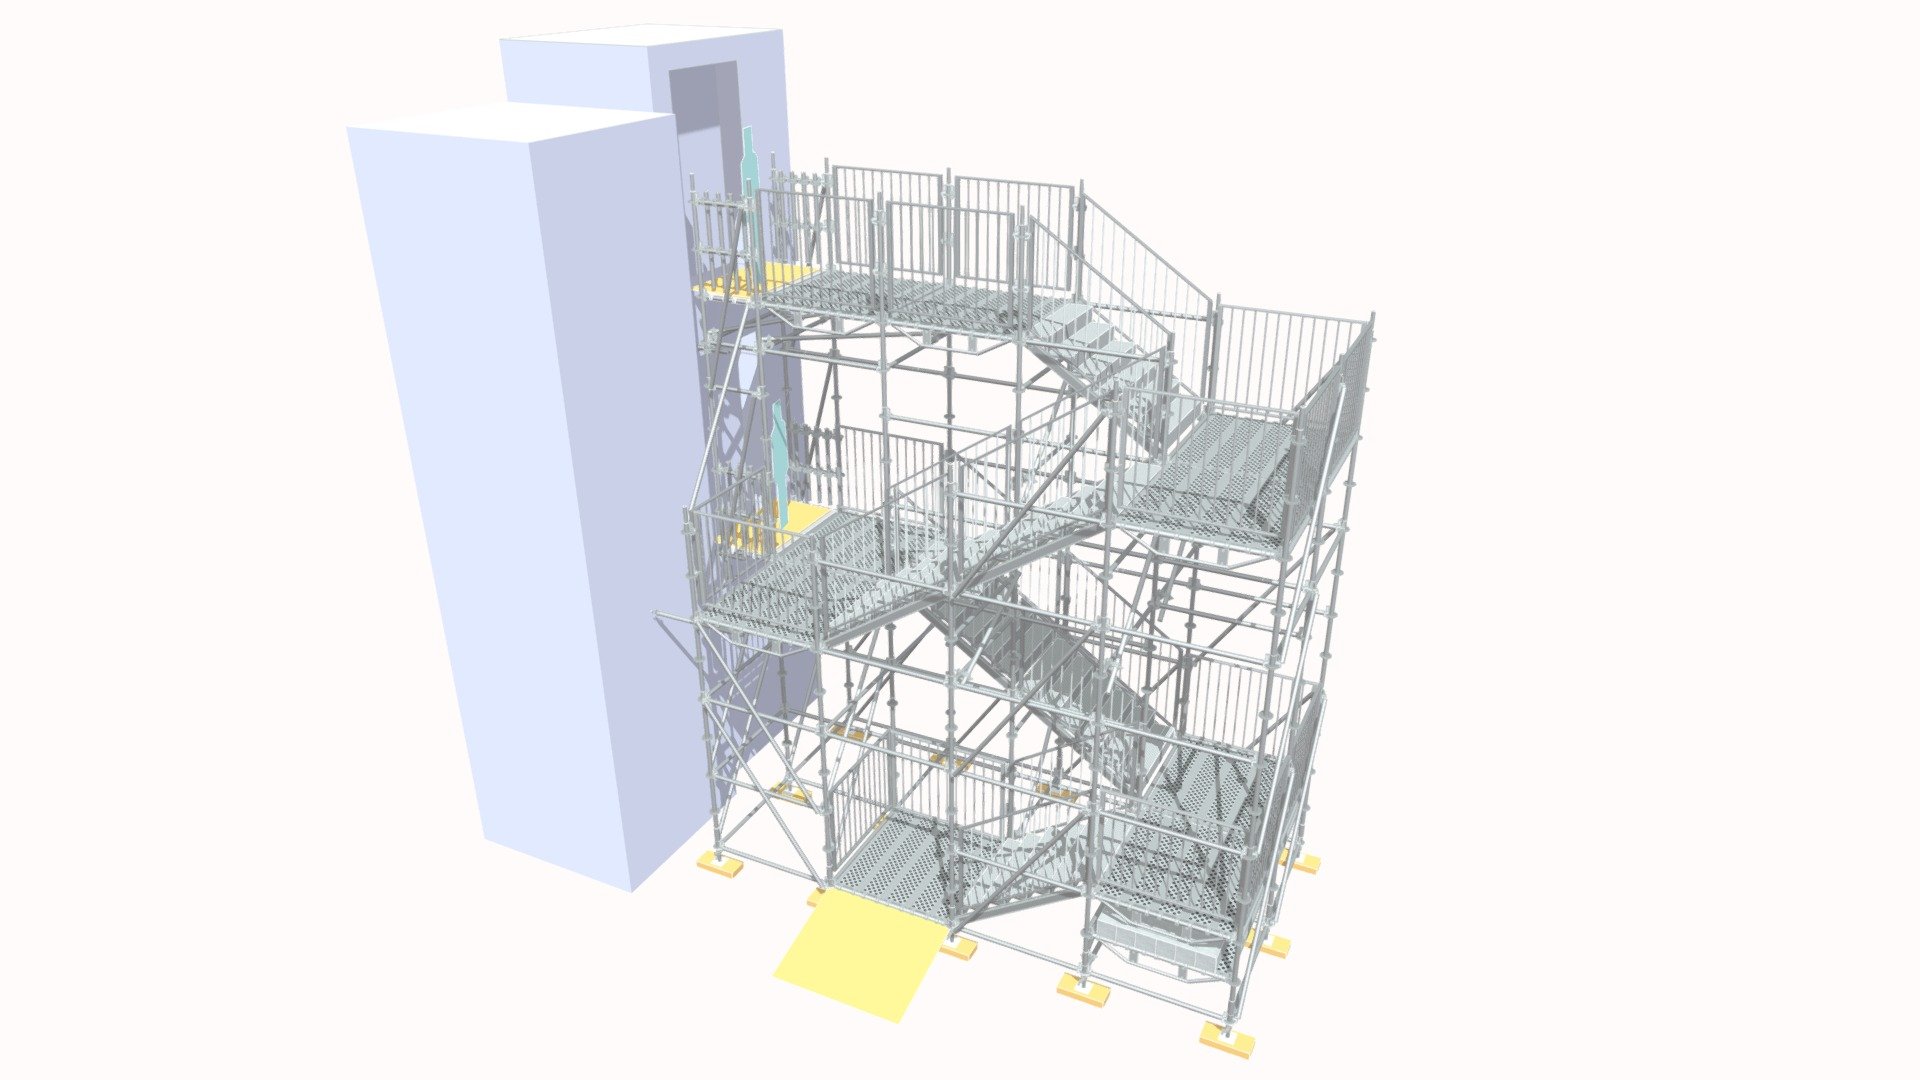 college Meyrueis travaux 2e phase
https://skpmtx.blogspot.com/ - escalier public - 3D model by GLRO 3d model